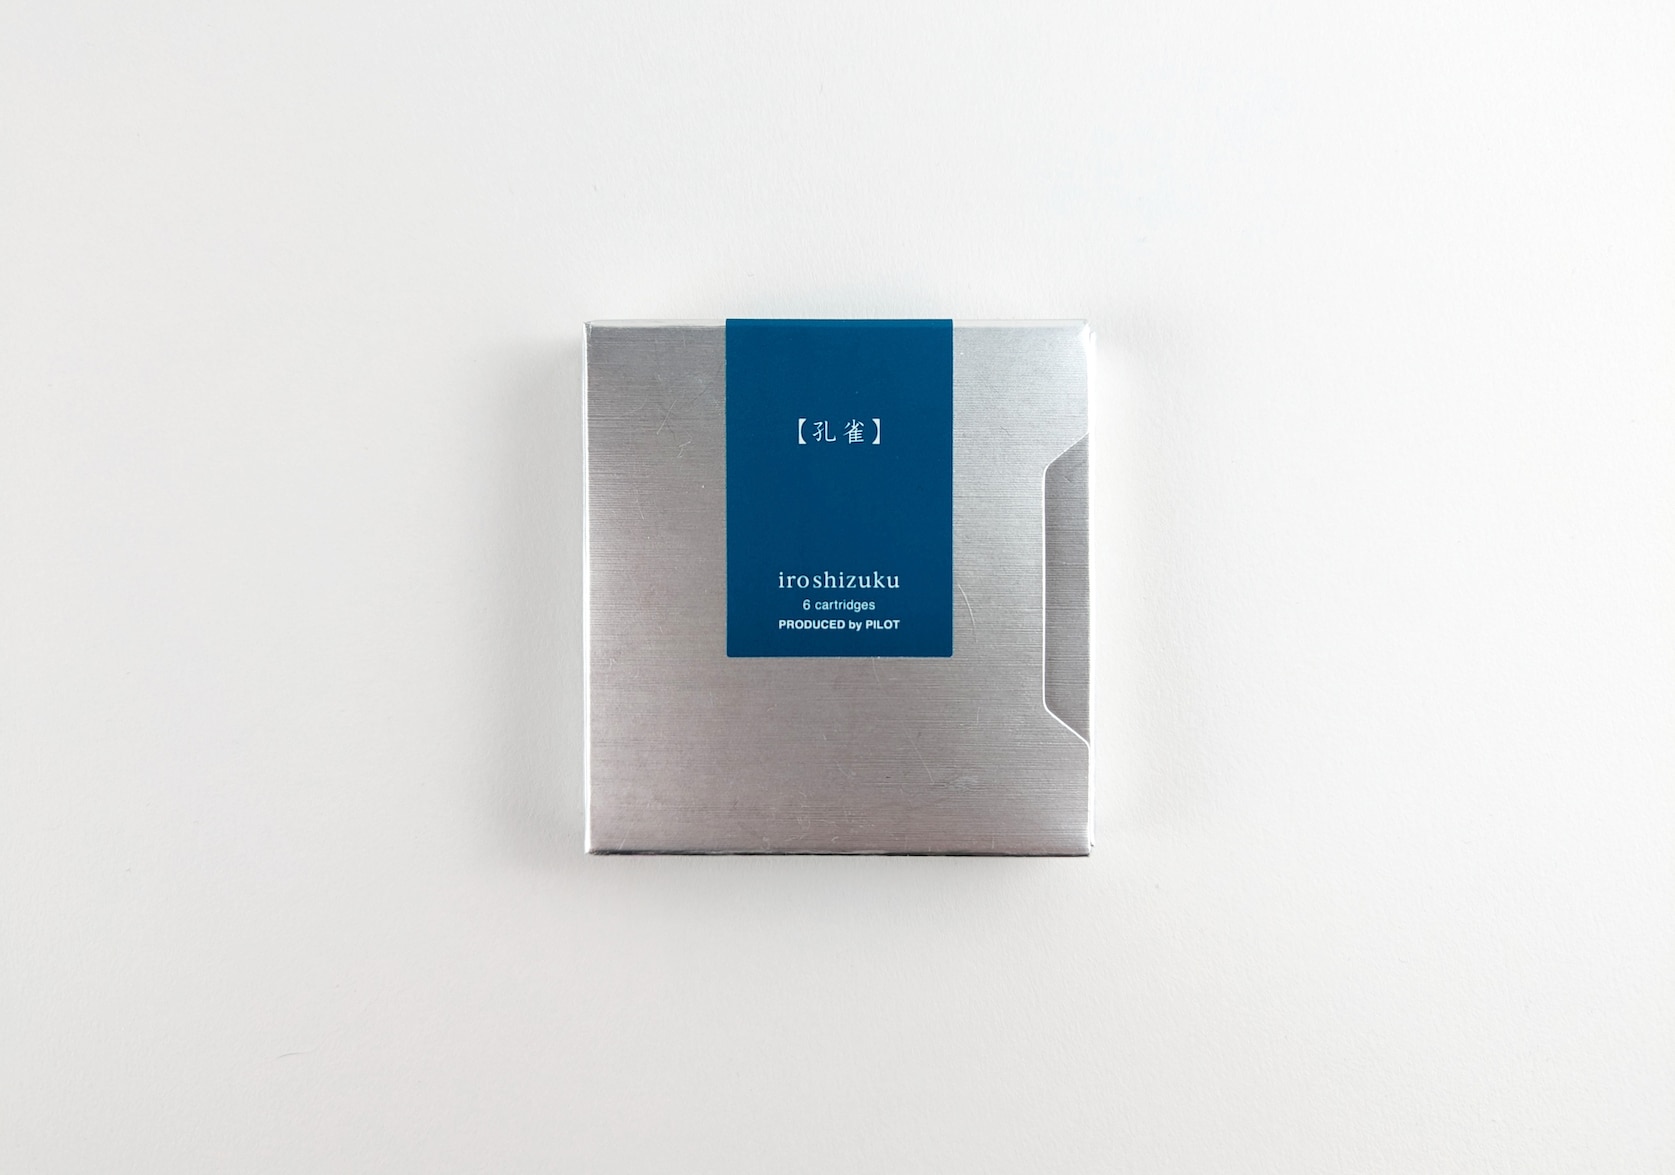 Silver sliding box. Rectangular turquoise sticker with white text that reads: ku-jaku. iroshizuku. 6 cartridges. Produced by Pilot.